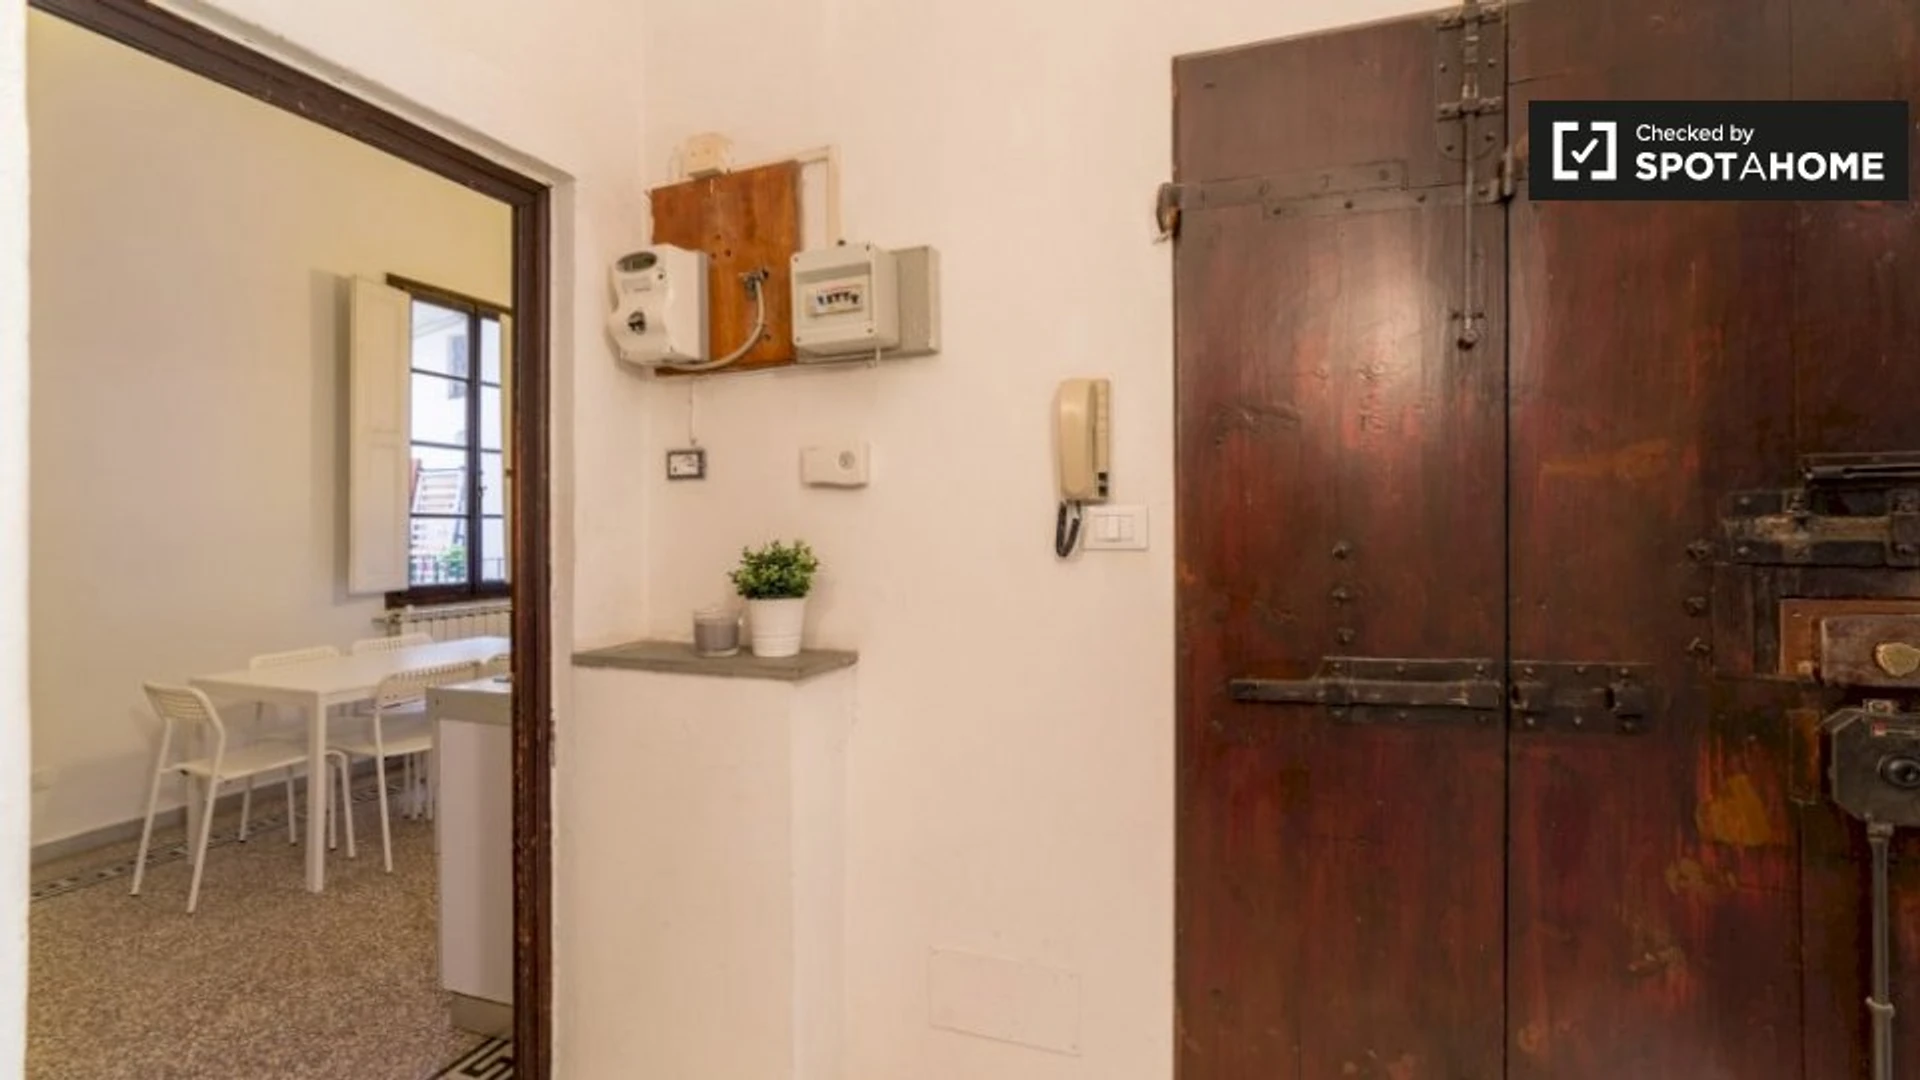 Habitación privada barata en Florencia